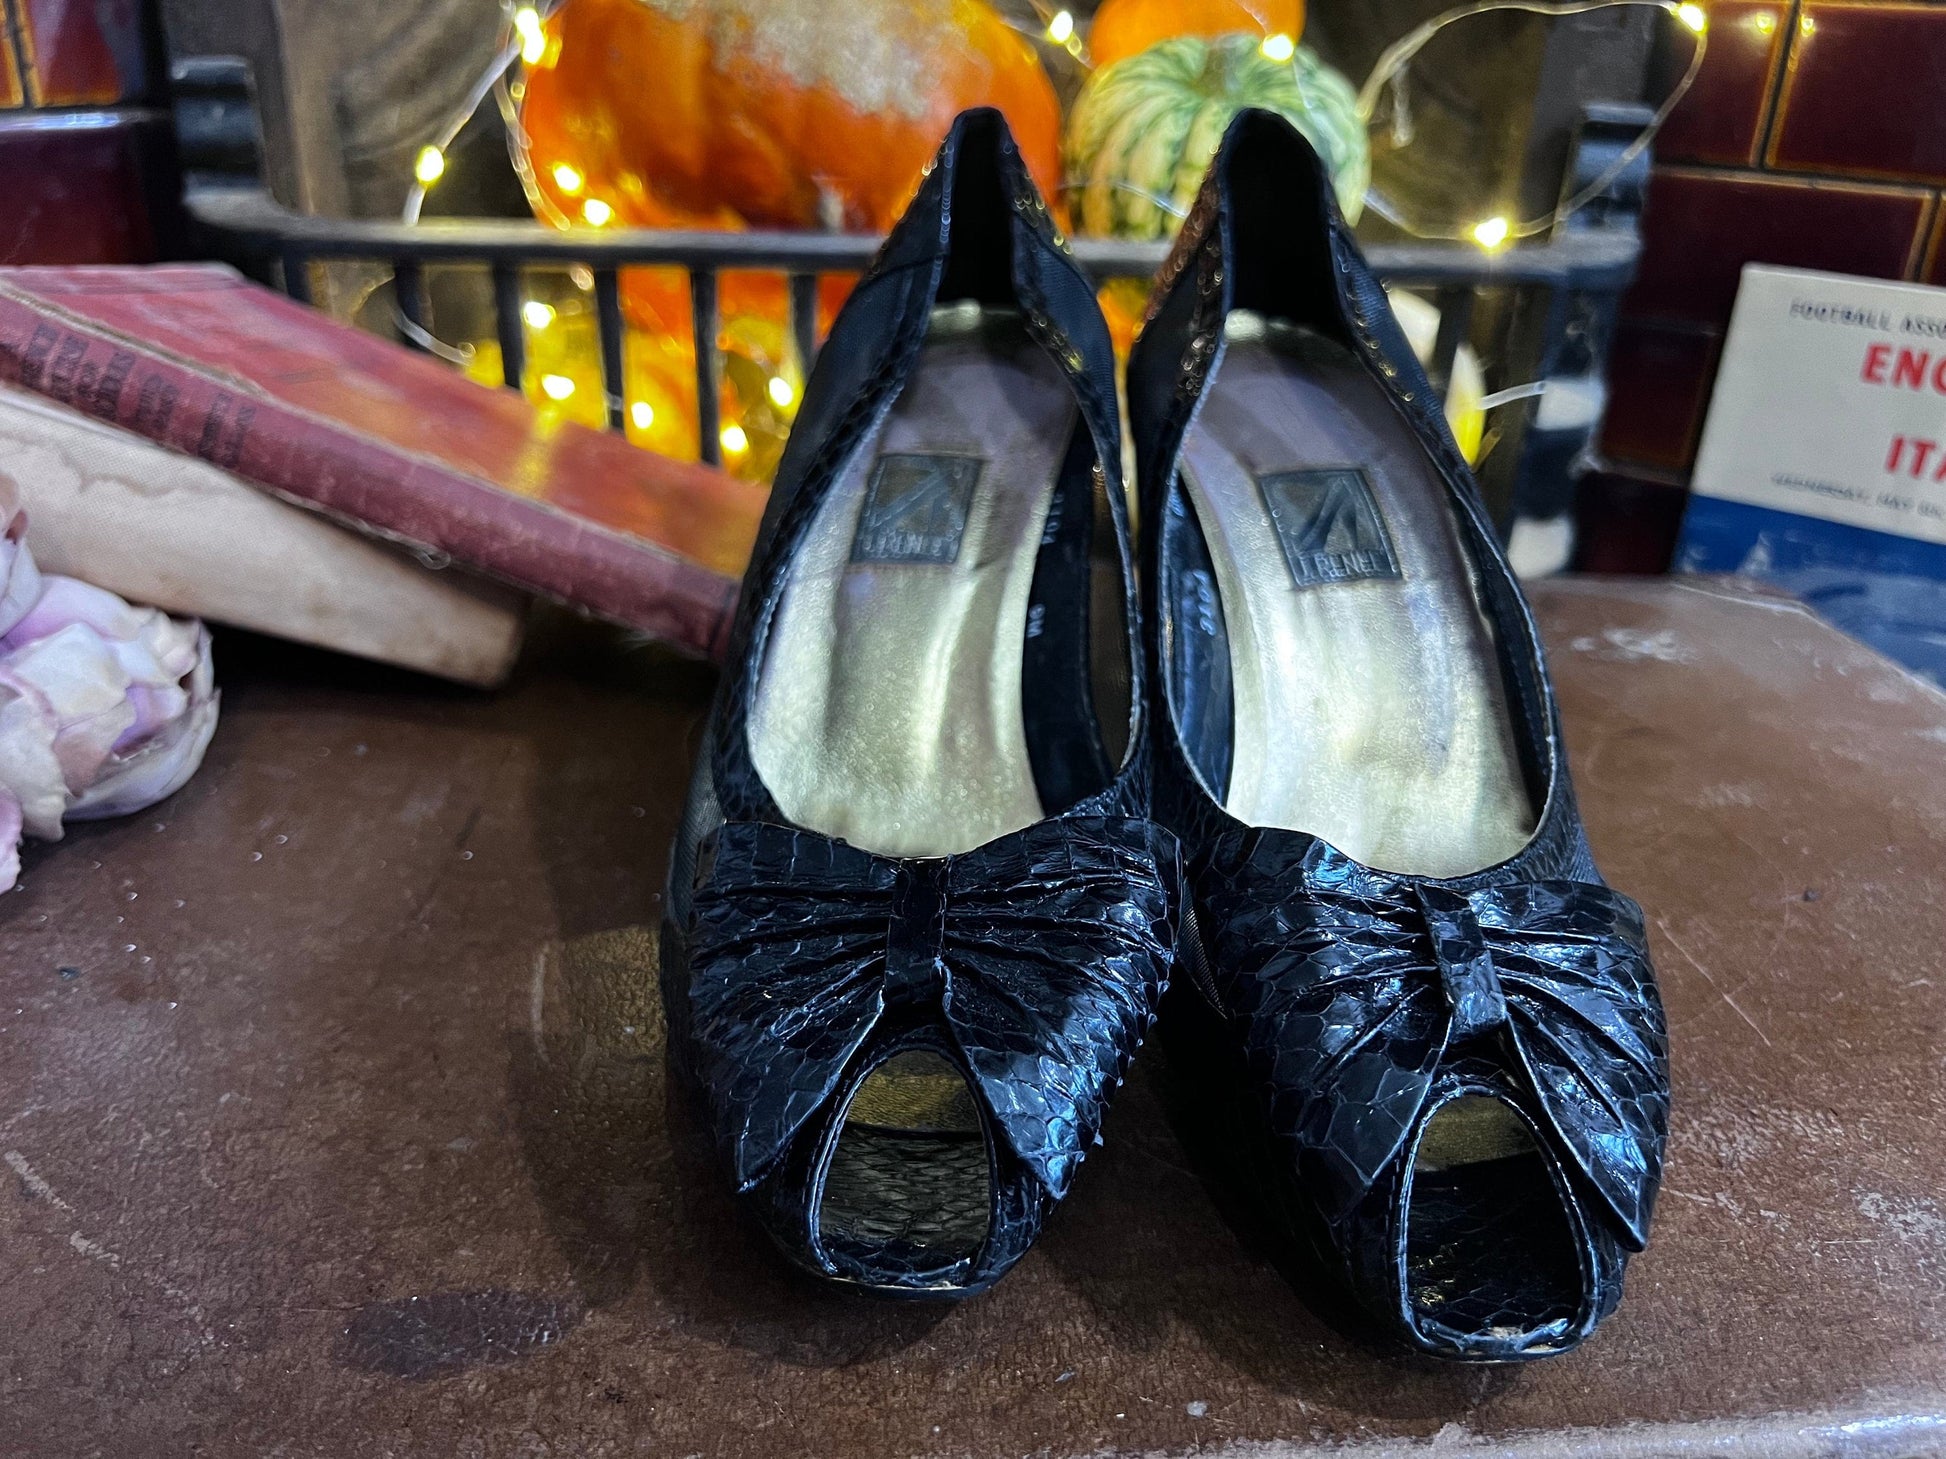 1950s Vintage J Renee Snakeskin Mesh shoes Black Suede Crochet UK 6 - Vintage Peep Toe - Vintage Shoes, 1950s ladies shoes, black bow front